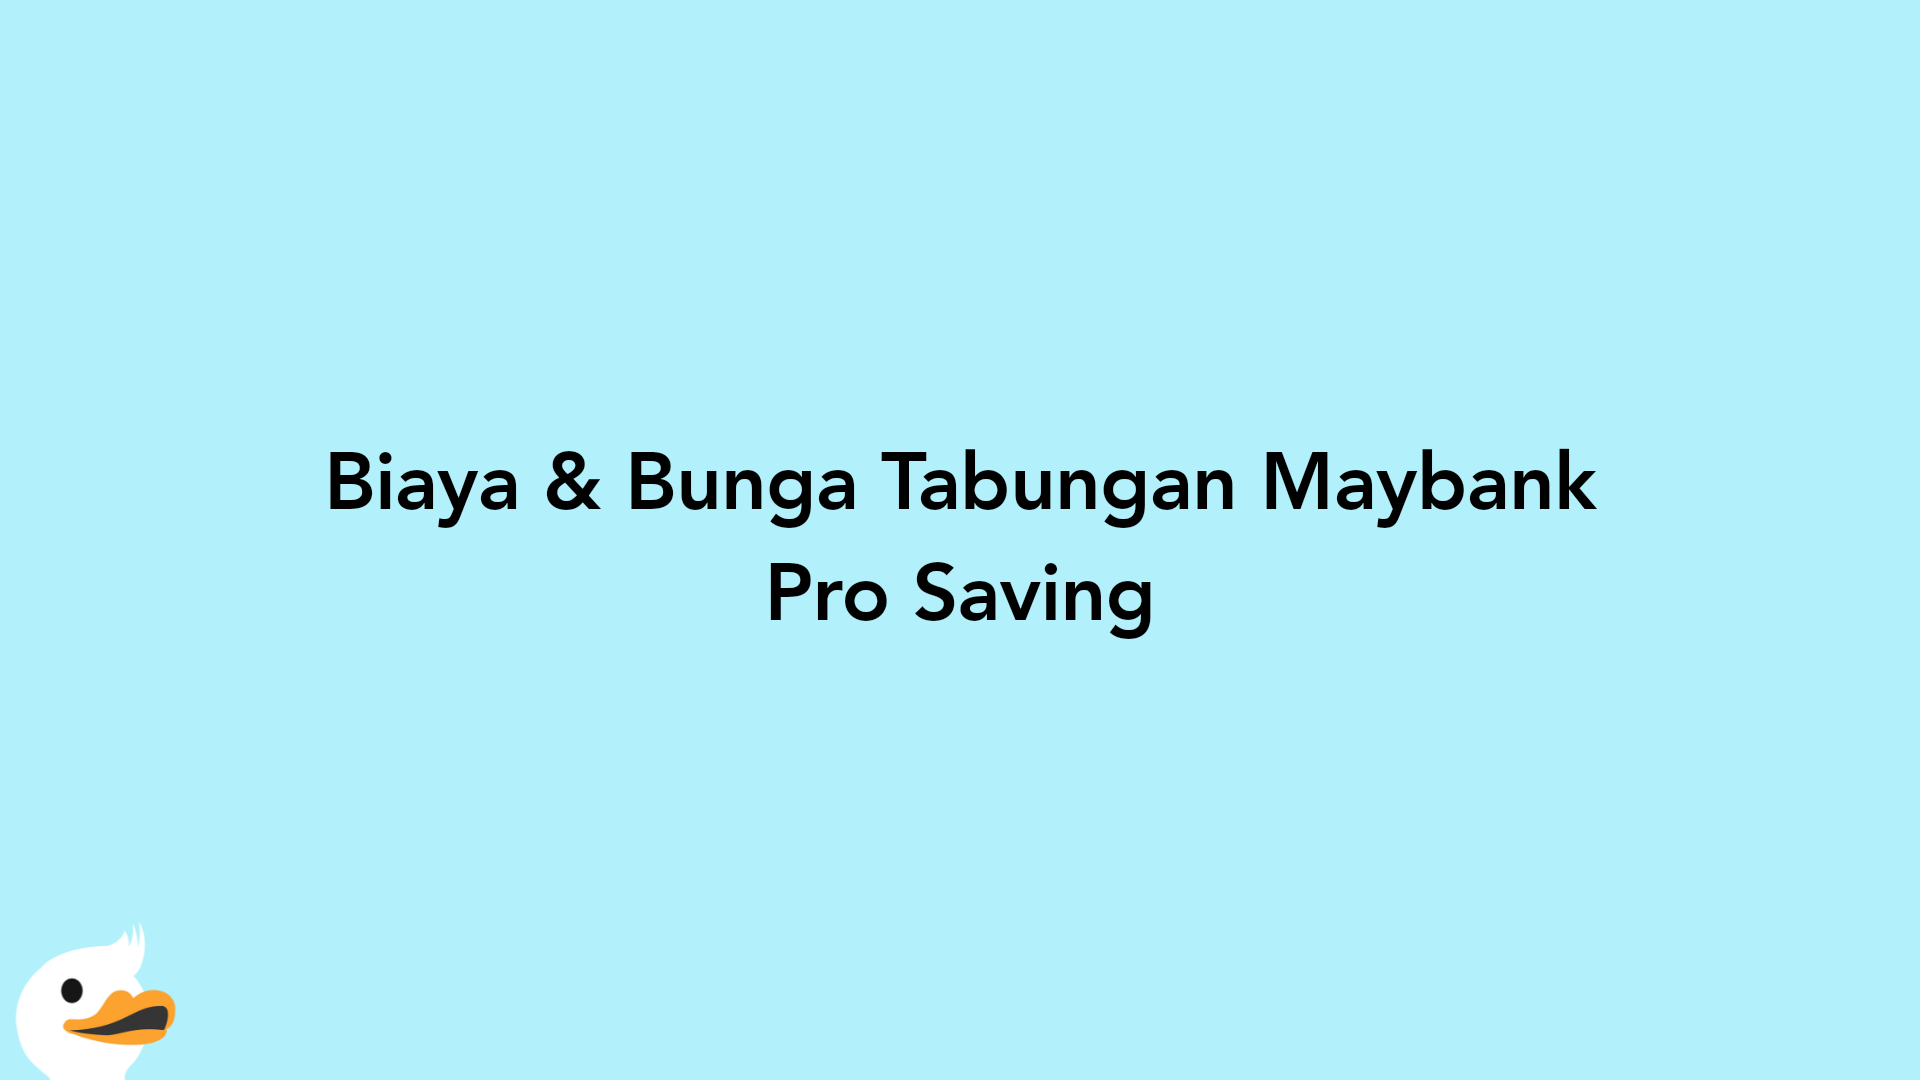 Biaya & Bunga Tabungan Maybank Pro Saving